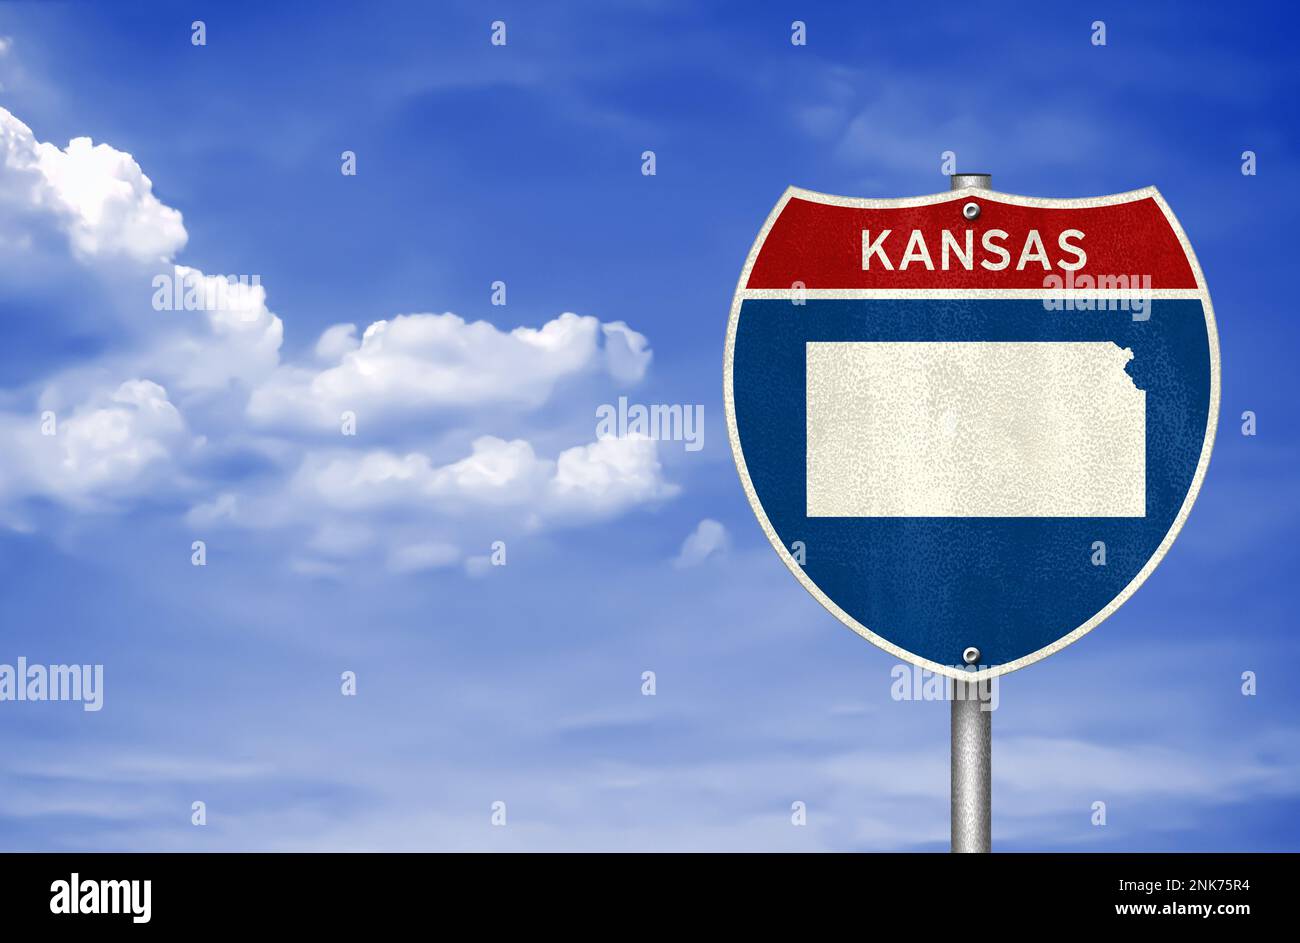 Kansas state map - road sign Stock Photo